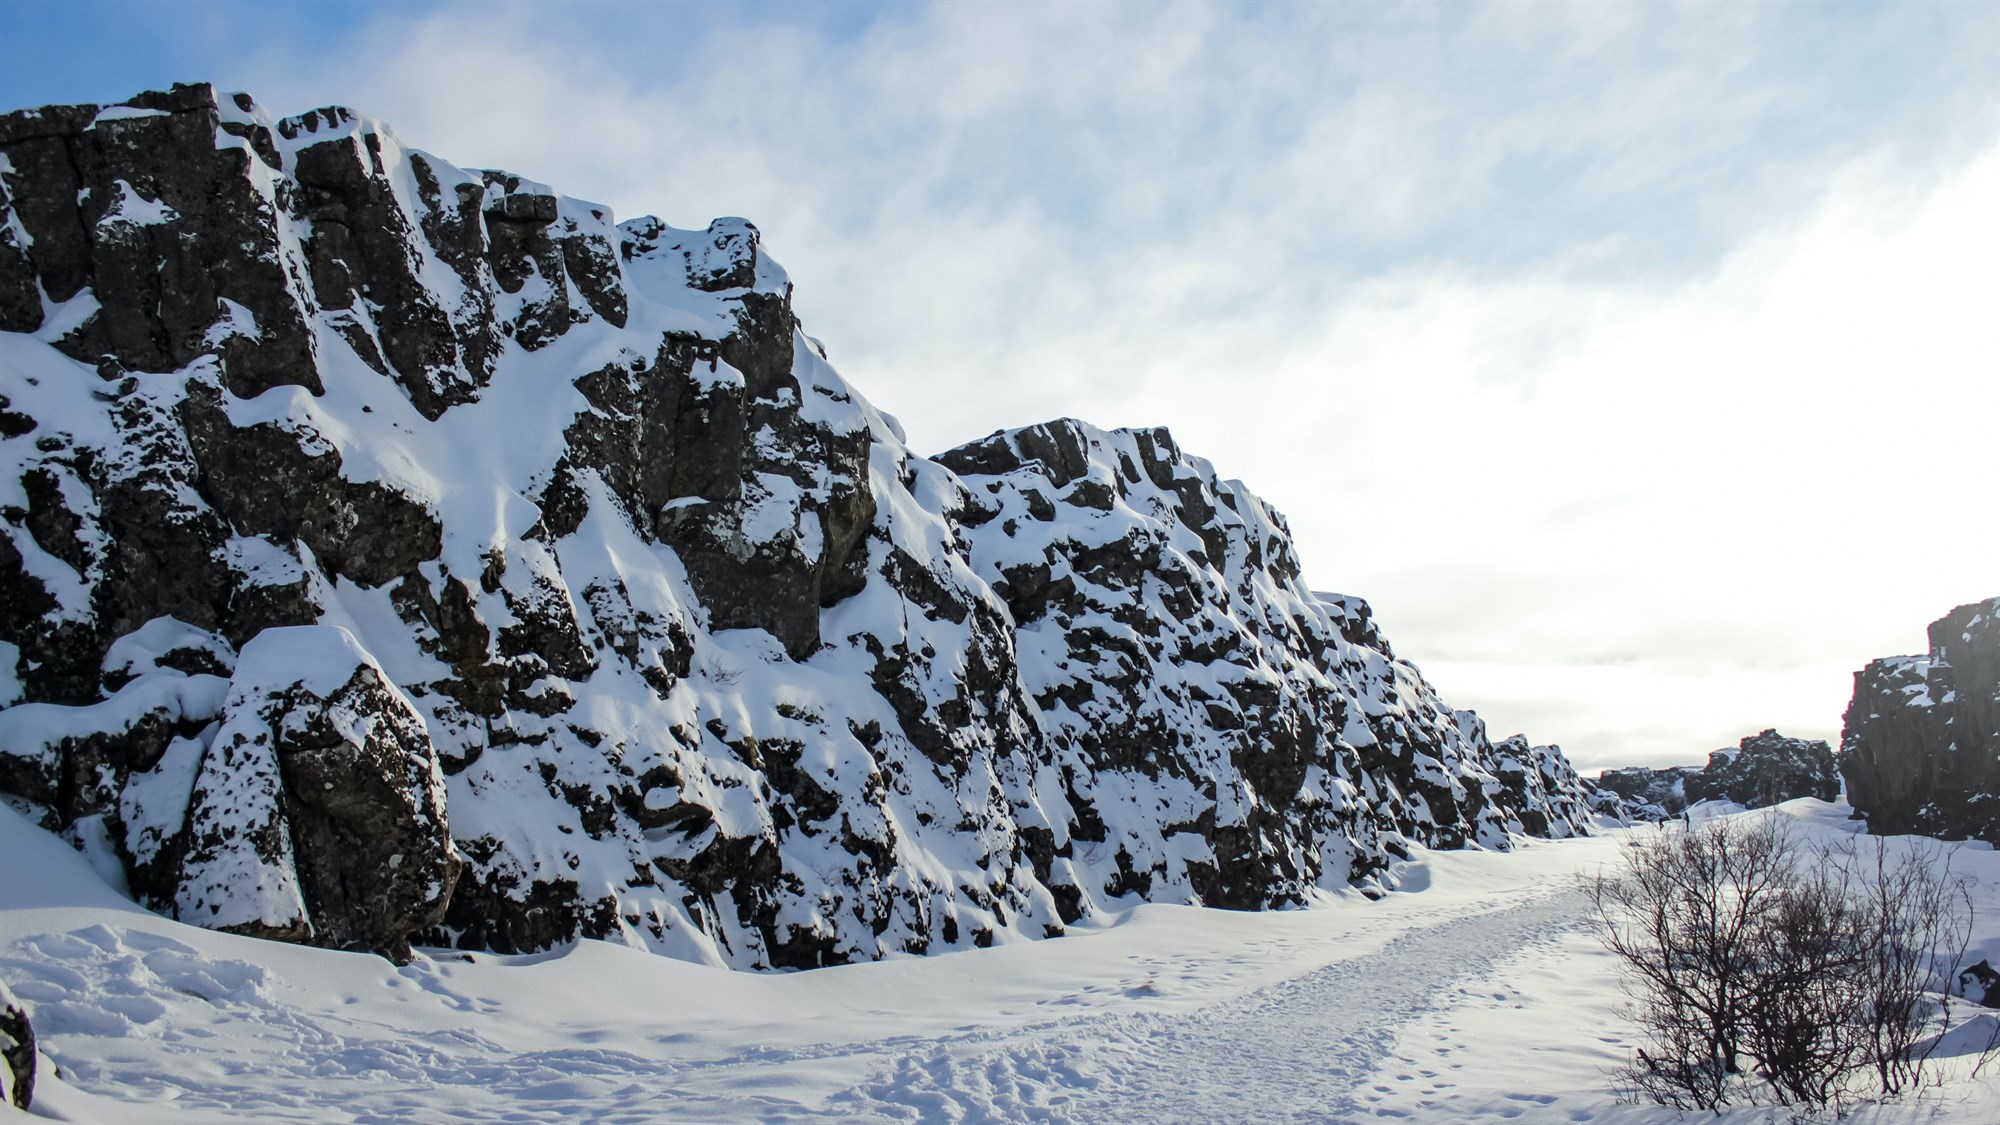 Thingvellir national park in the snow, Iceland